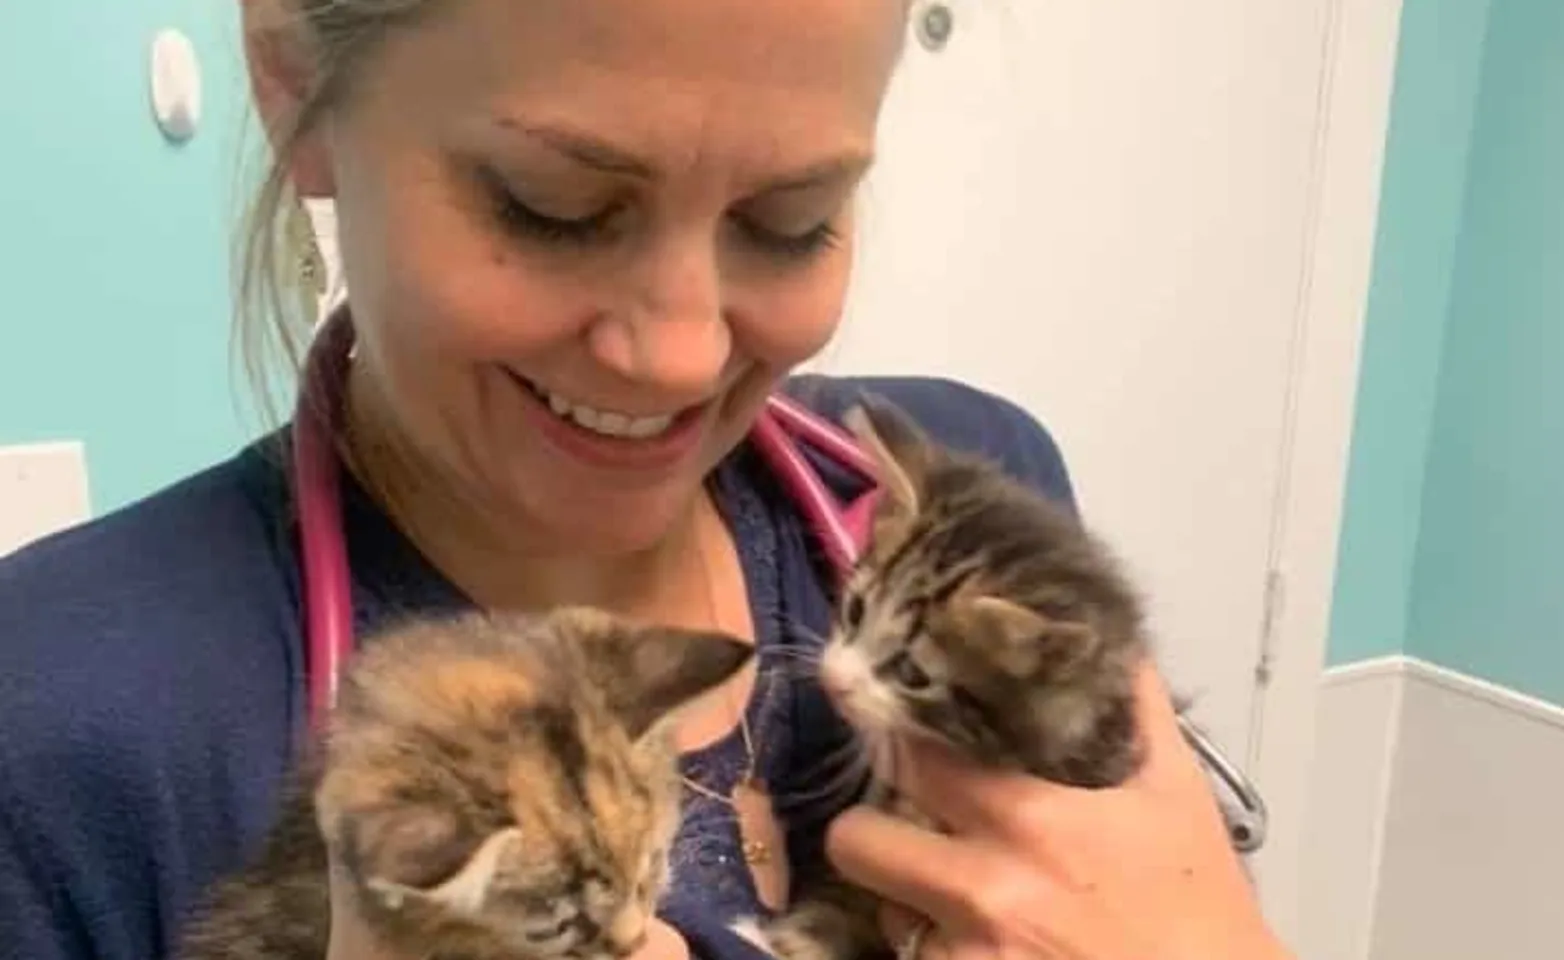 Strawbridge Animal Care staff member holding two small kittens